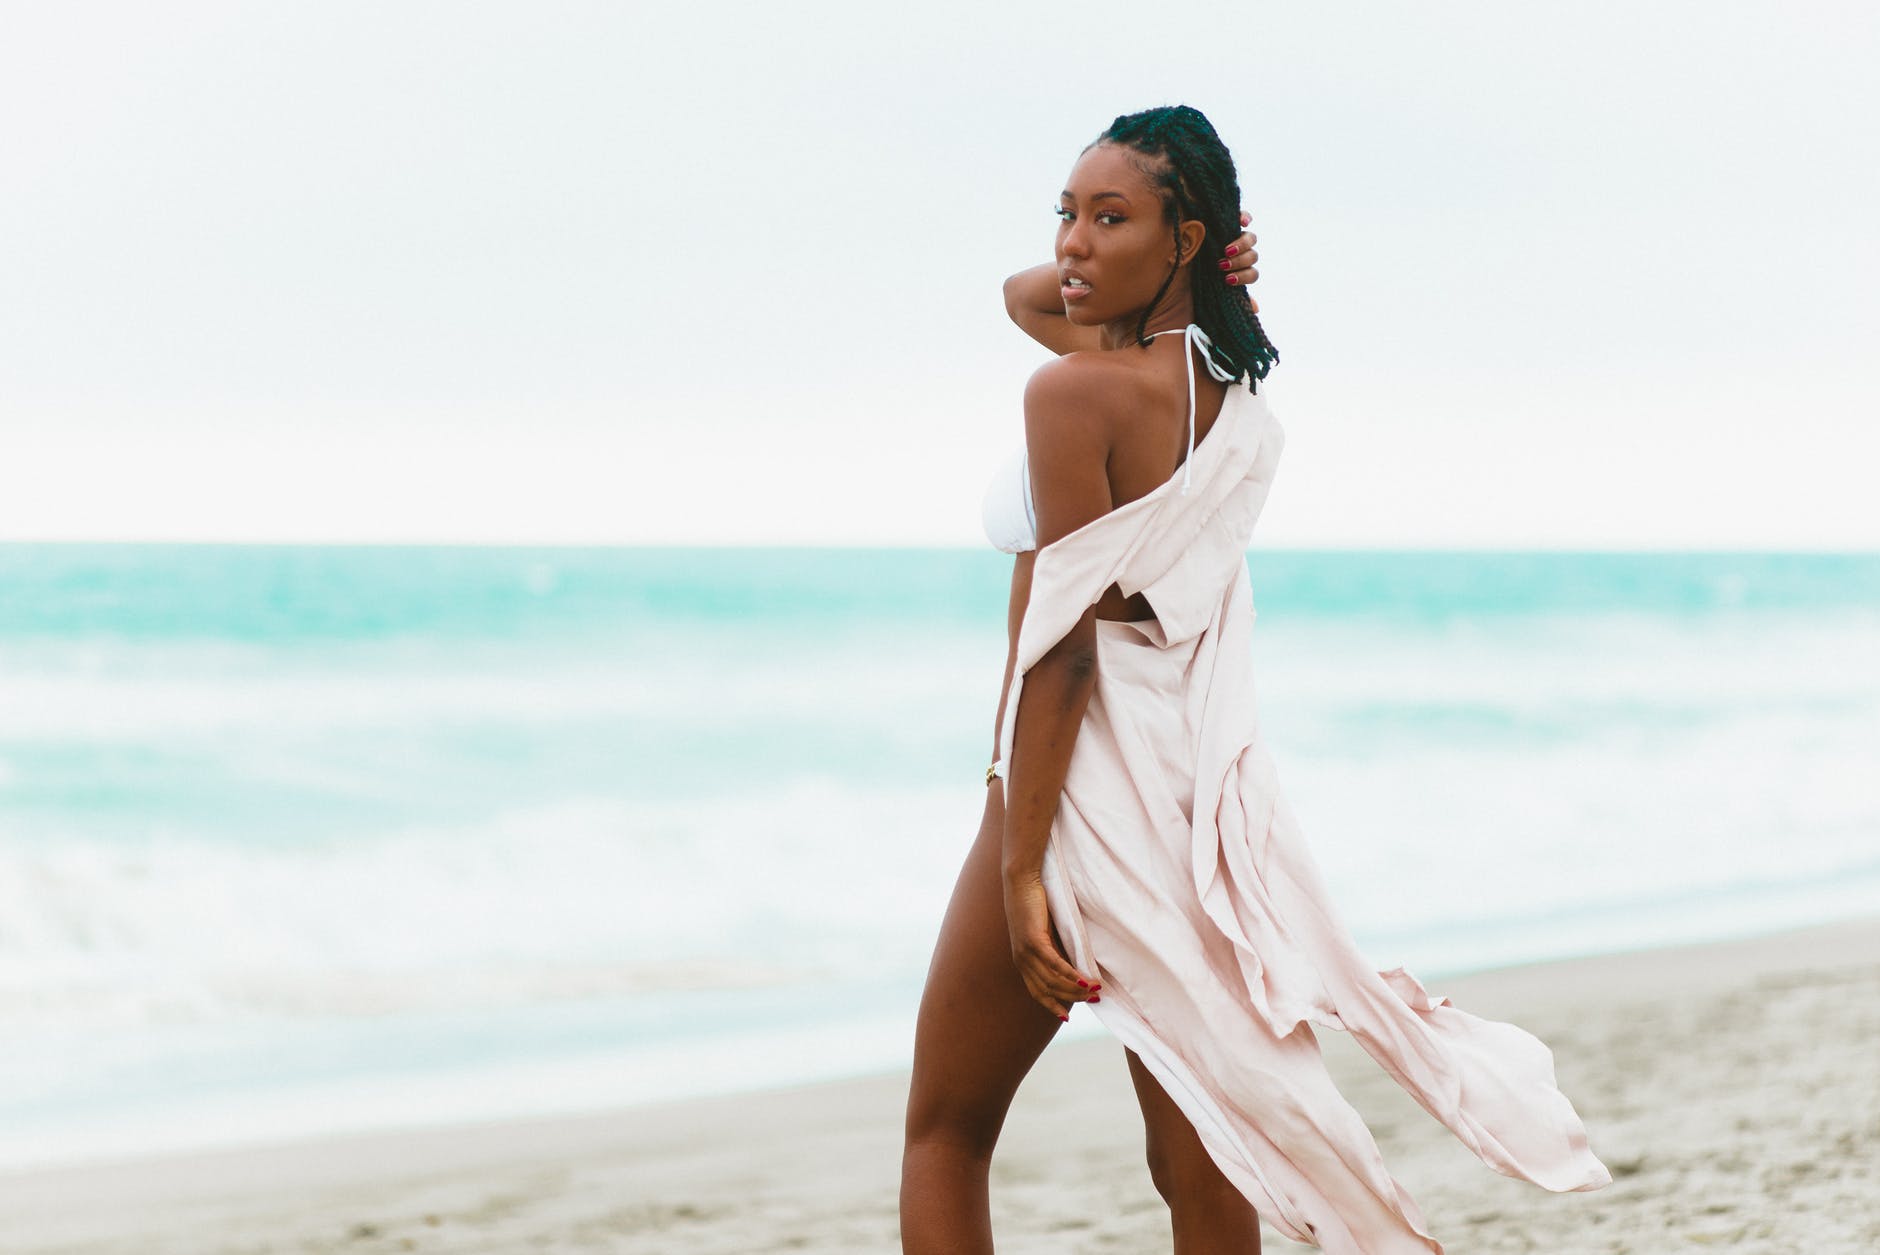 diana gogu share black woman nude beach photos